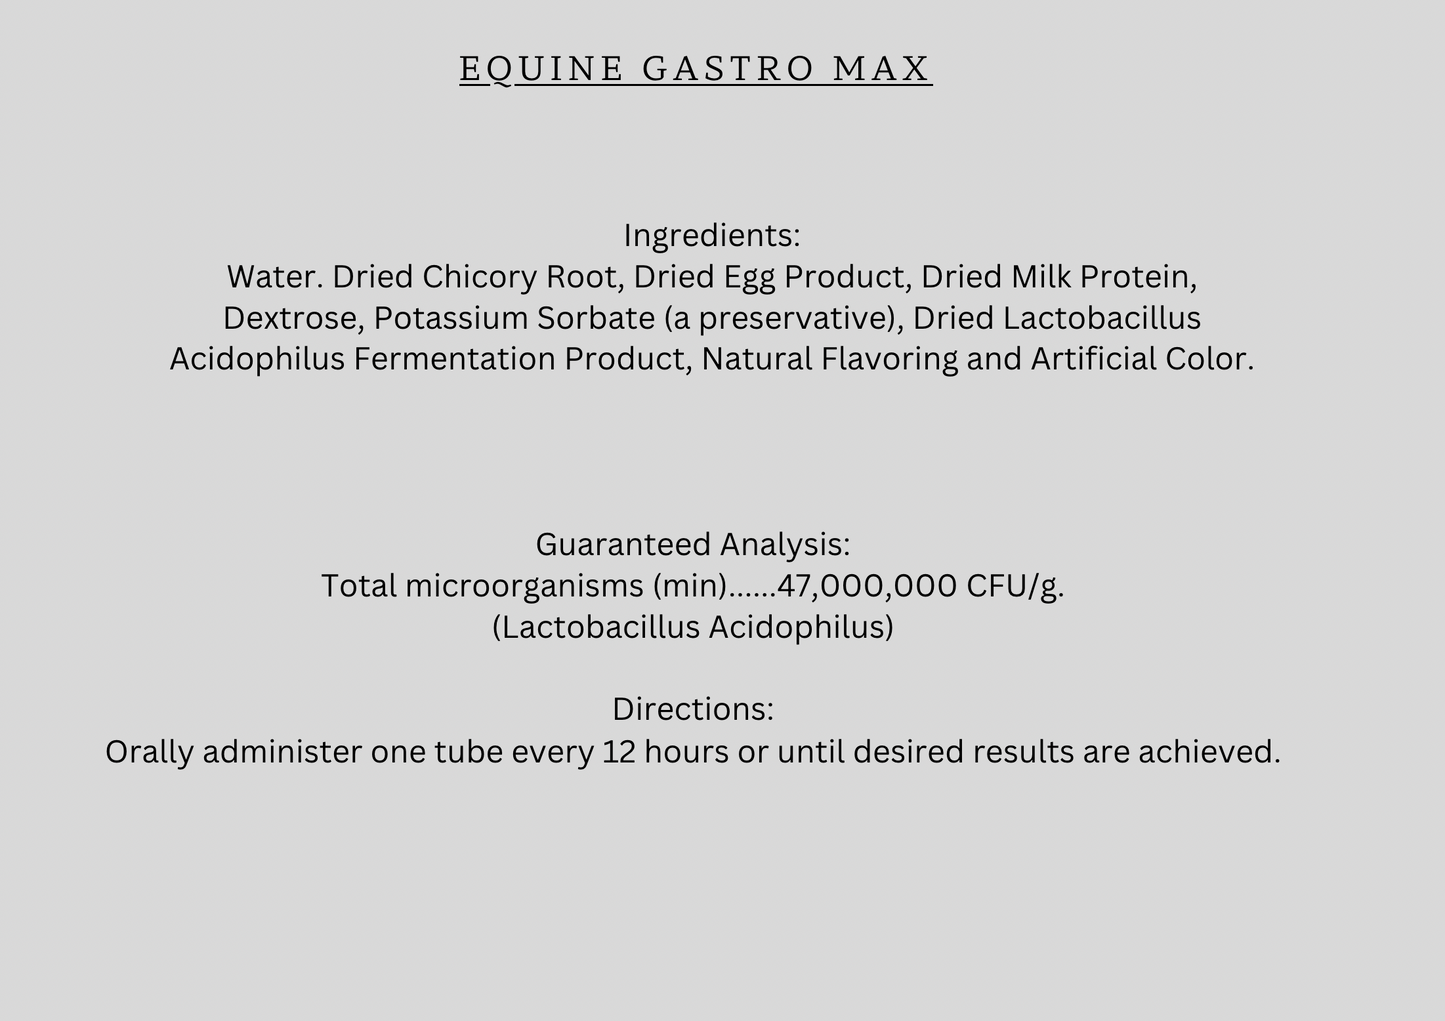 Equine Gastro Max - Gut Calming Support